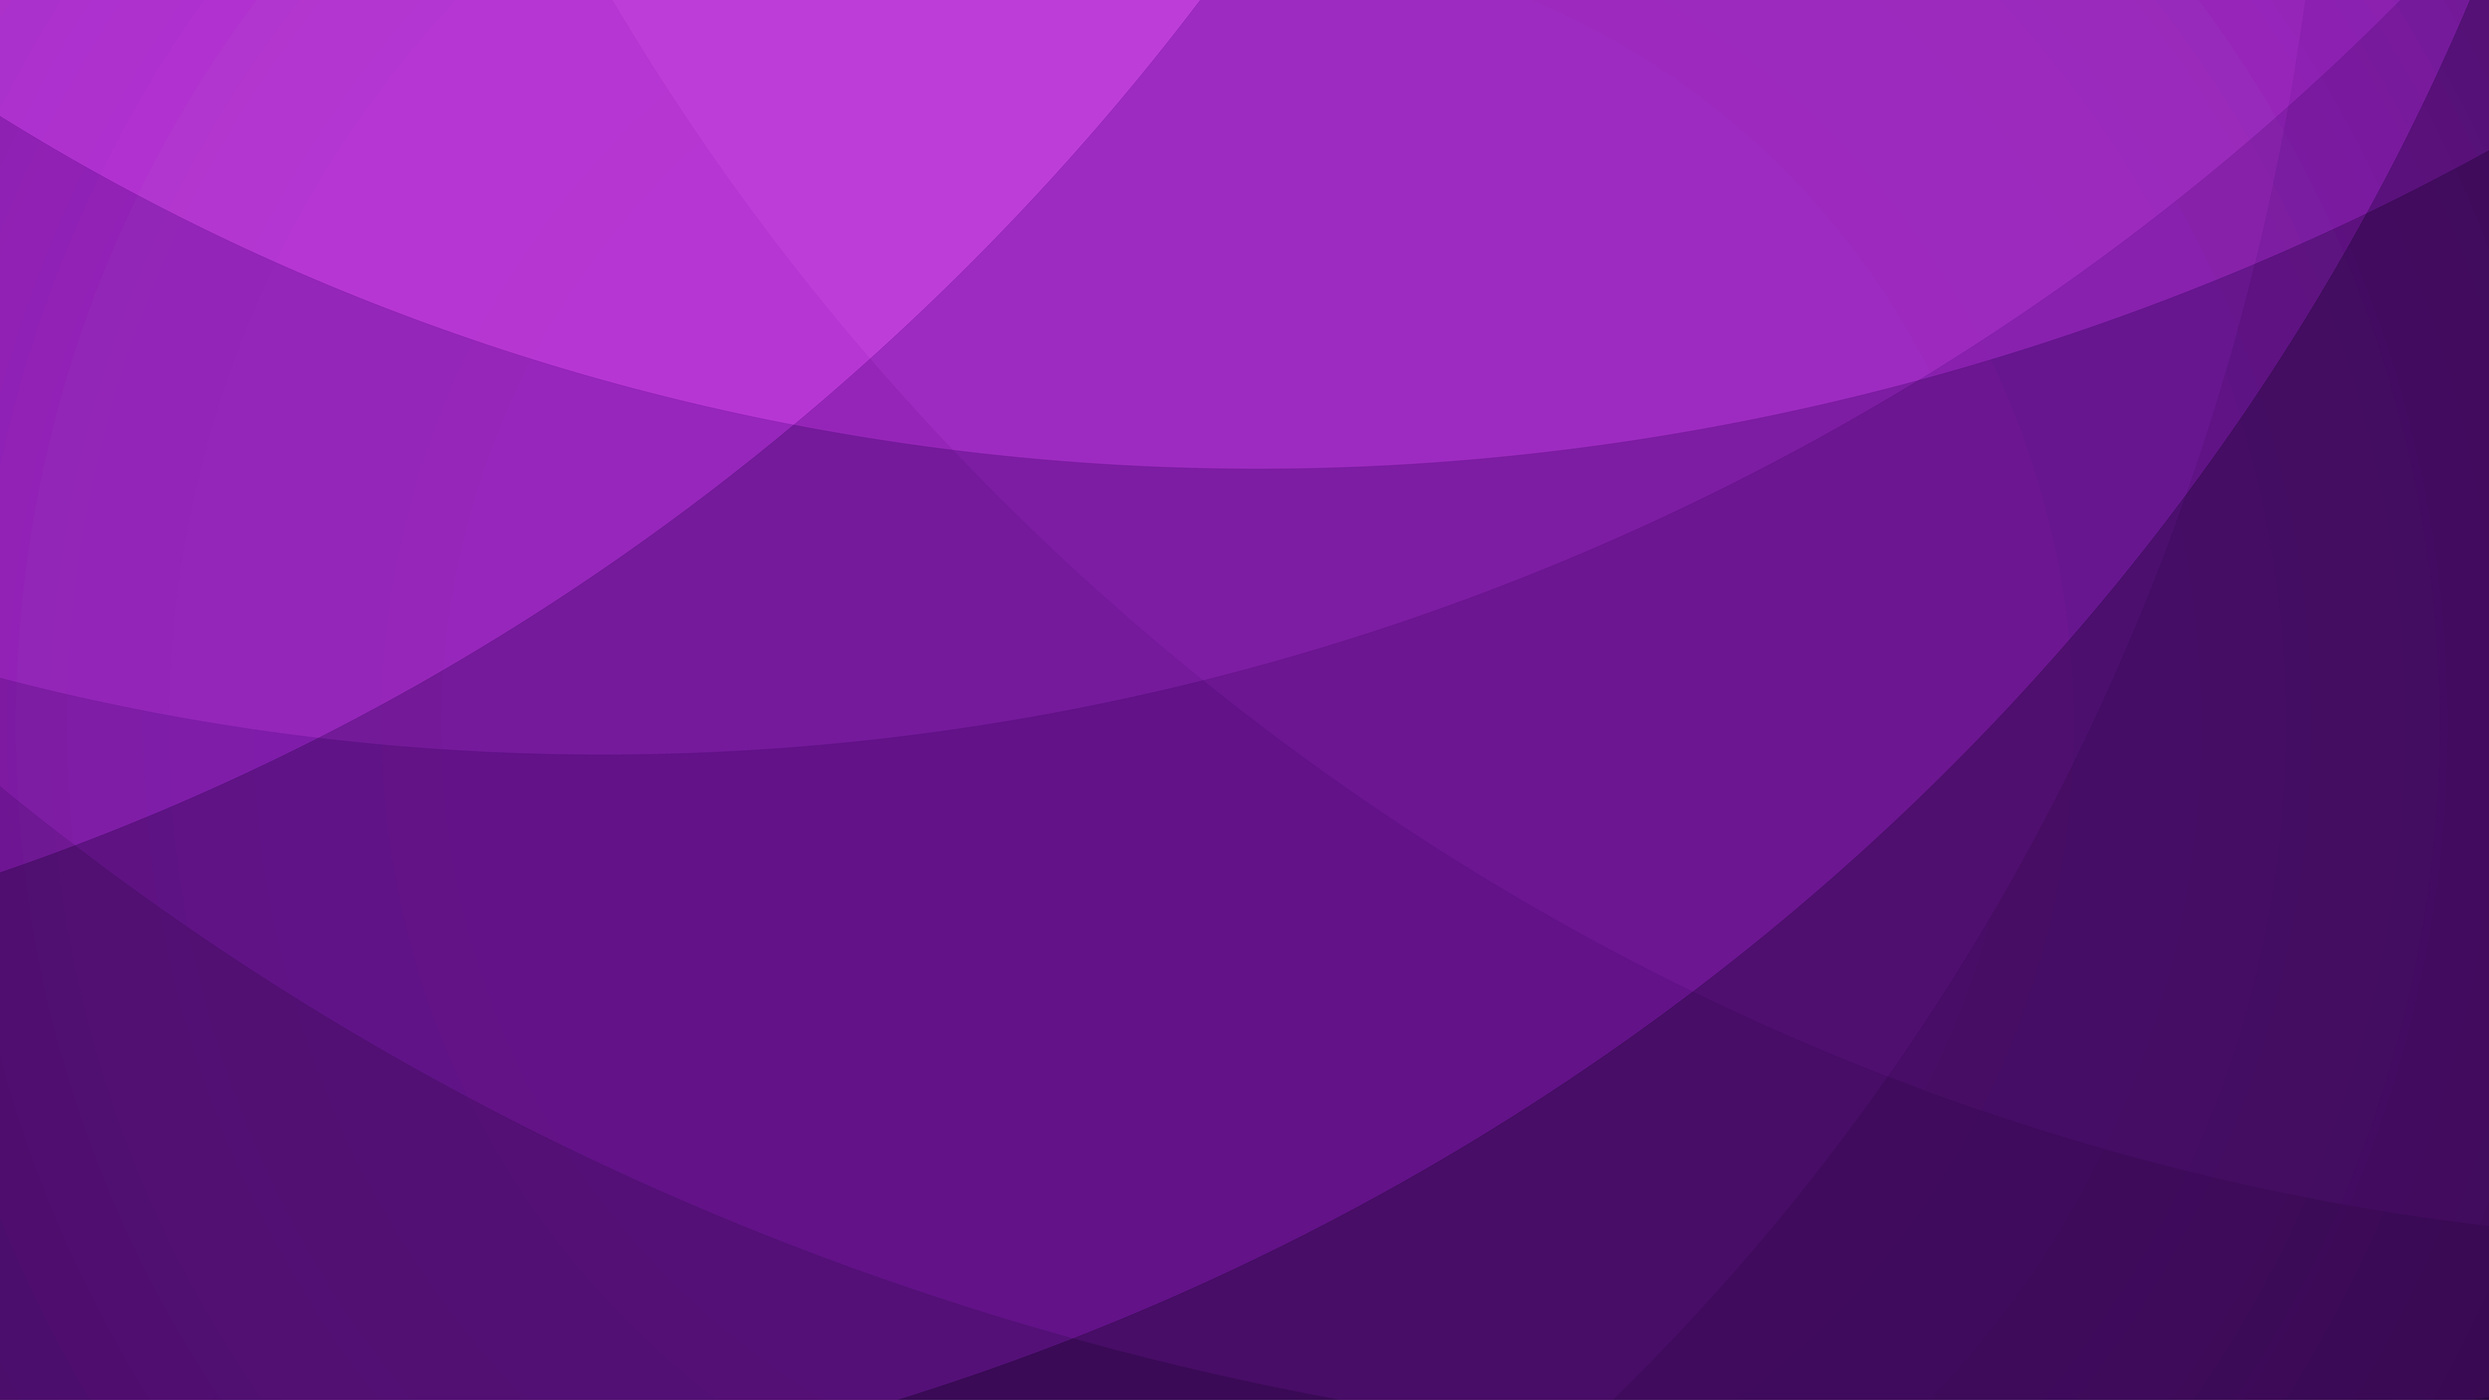 Purple geometric background